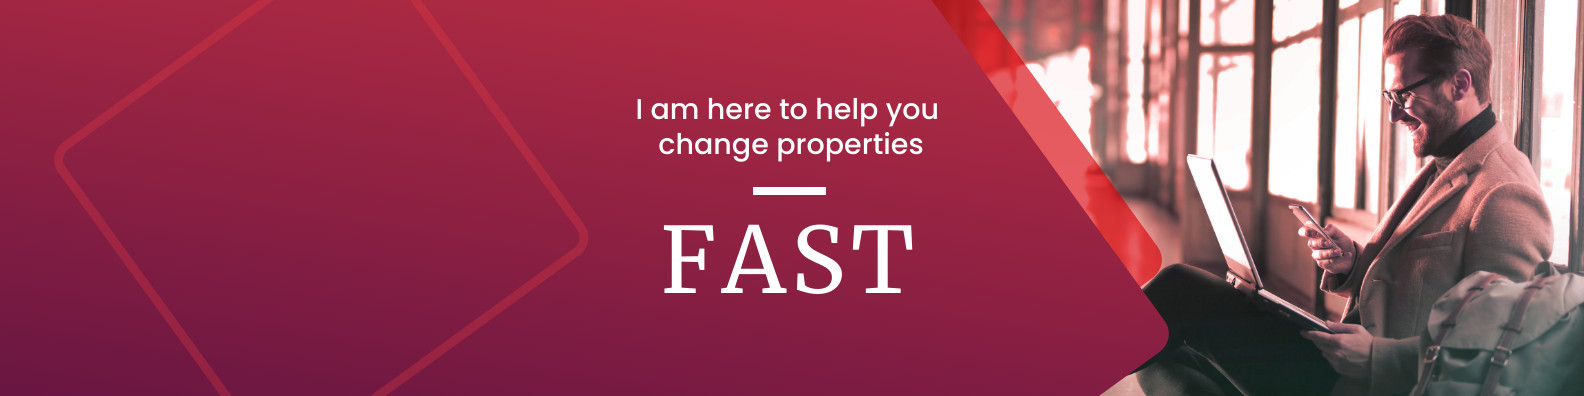 Fast Property Change Linkedin Profile BG